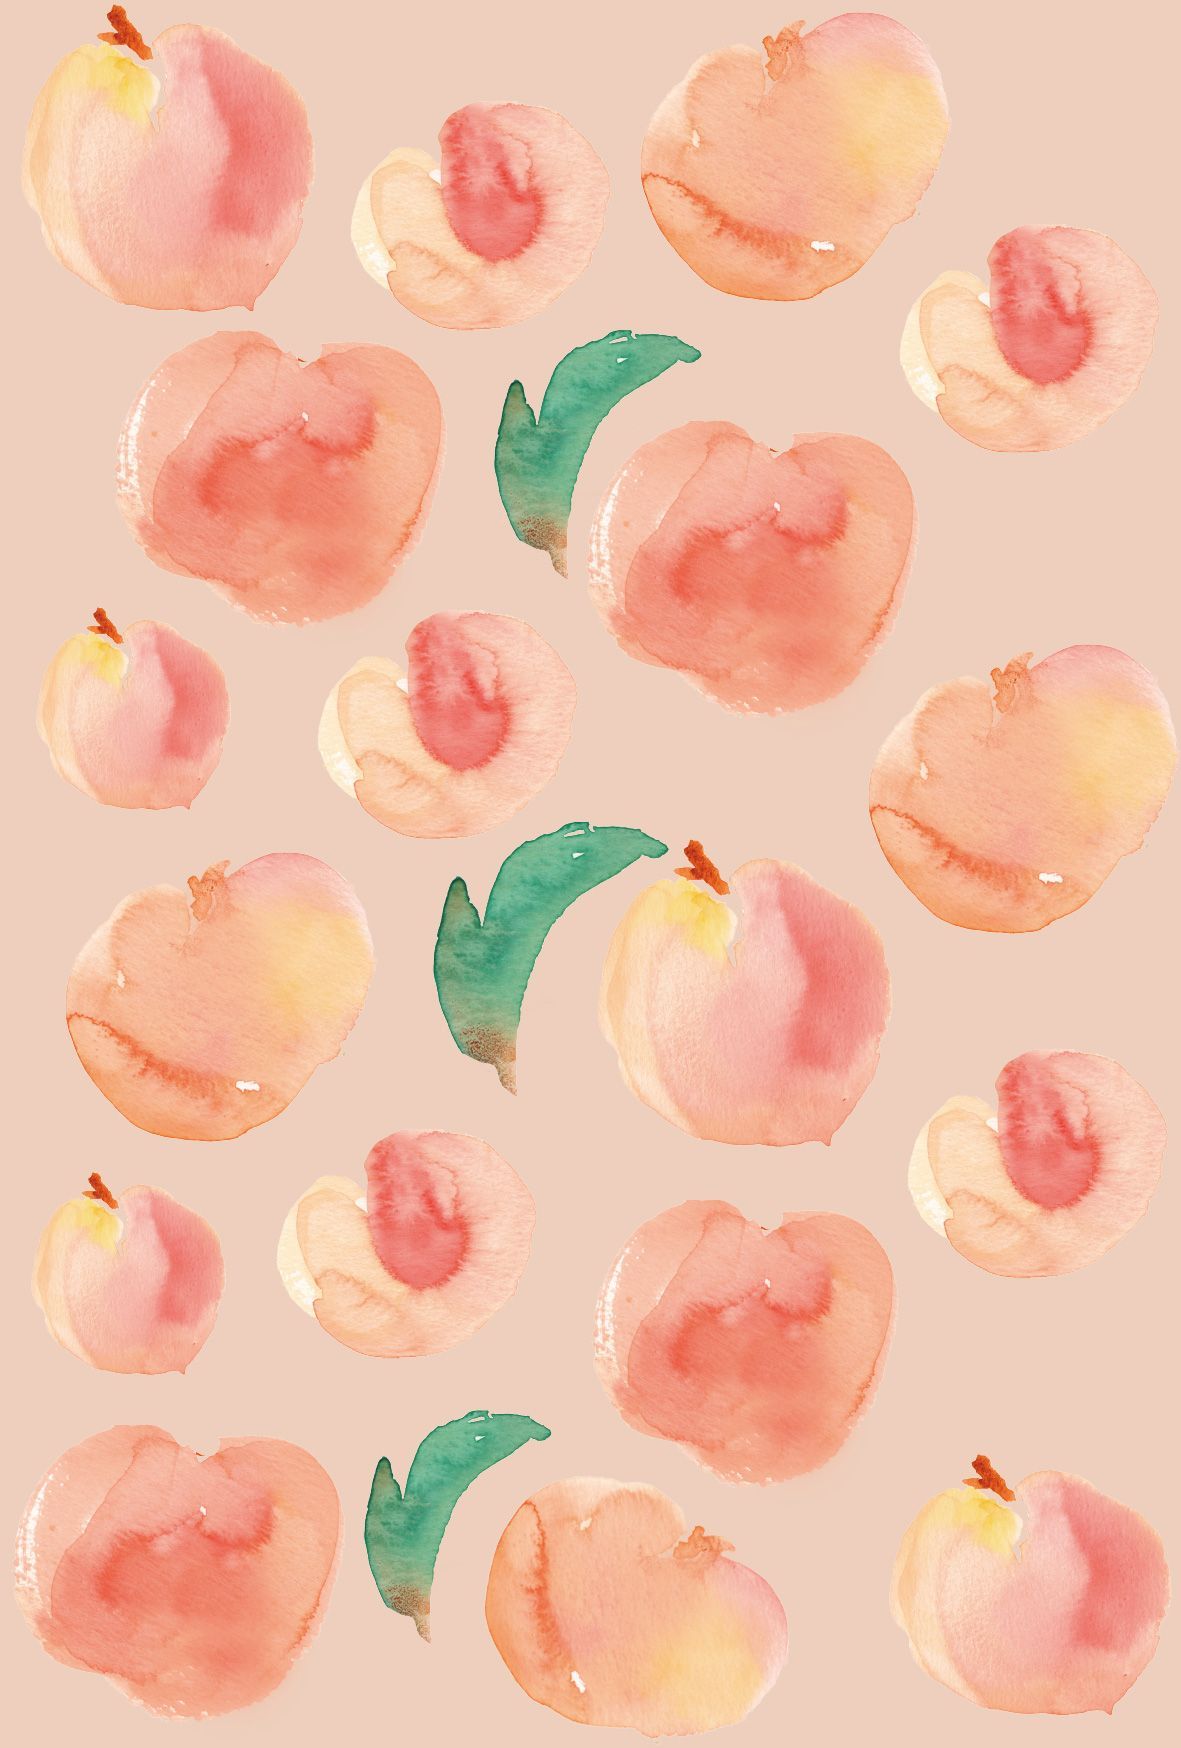 Princess Peach Butterflies Wallpaper by waterlily45 on DeviantArt